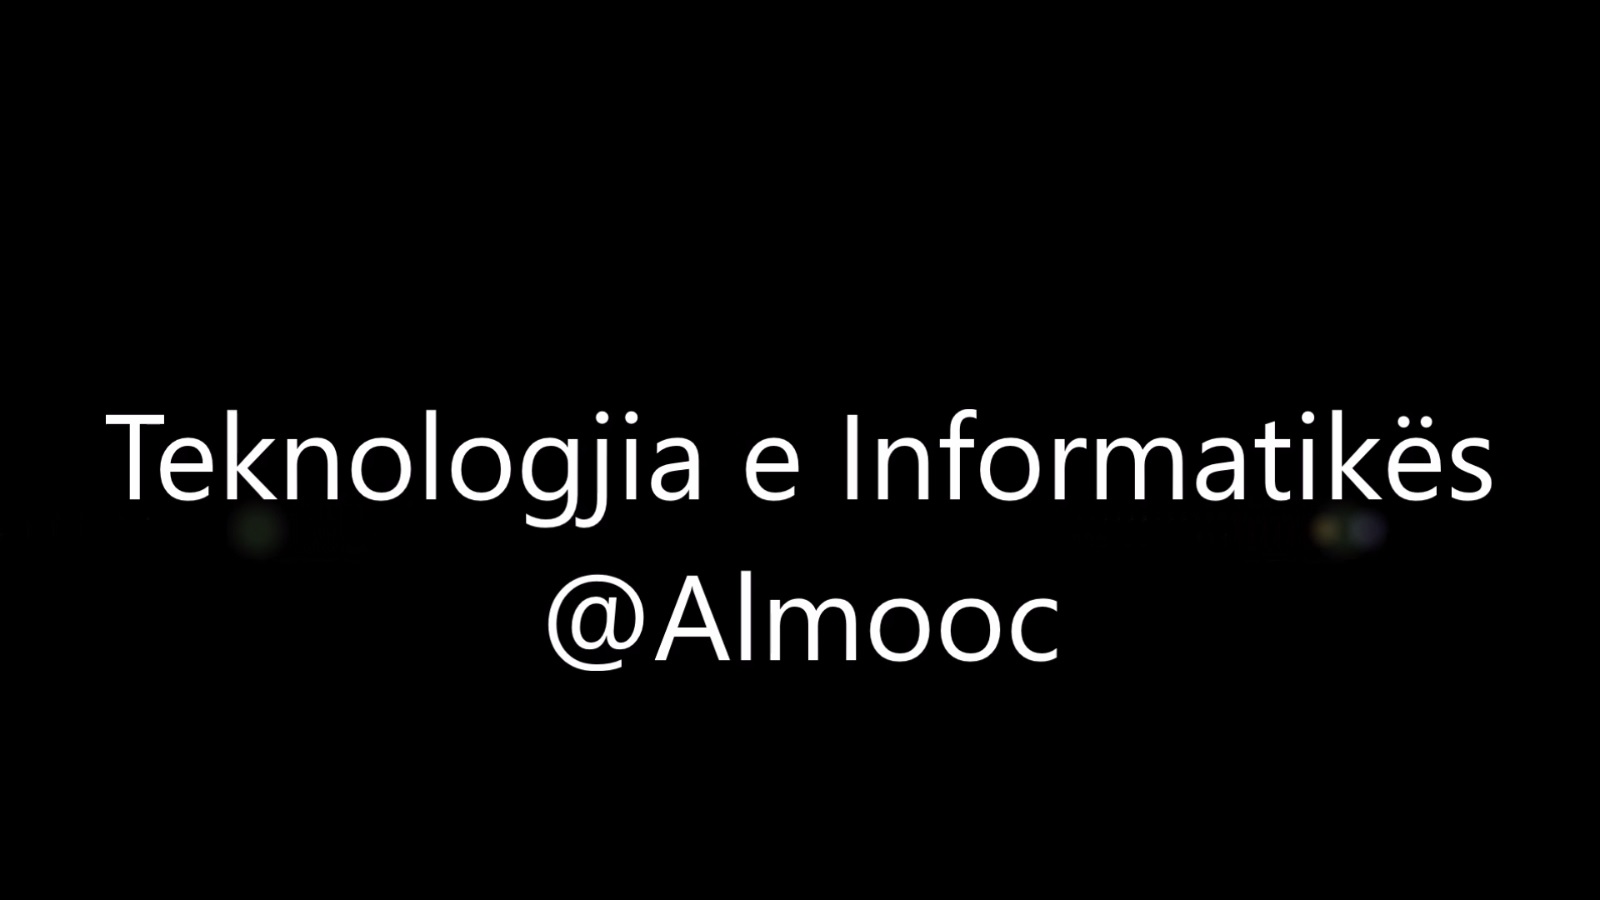 TiK @Almooc